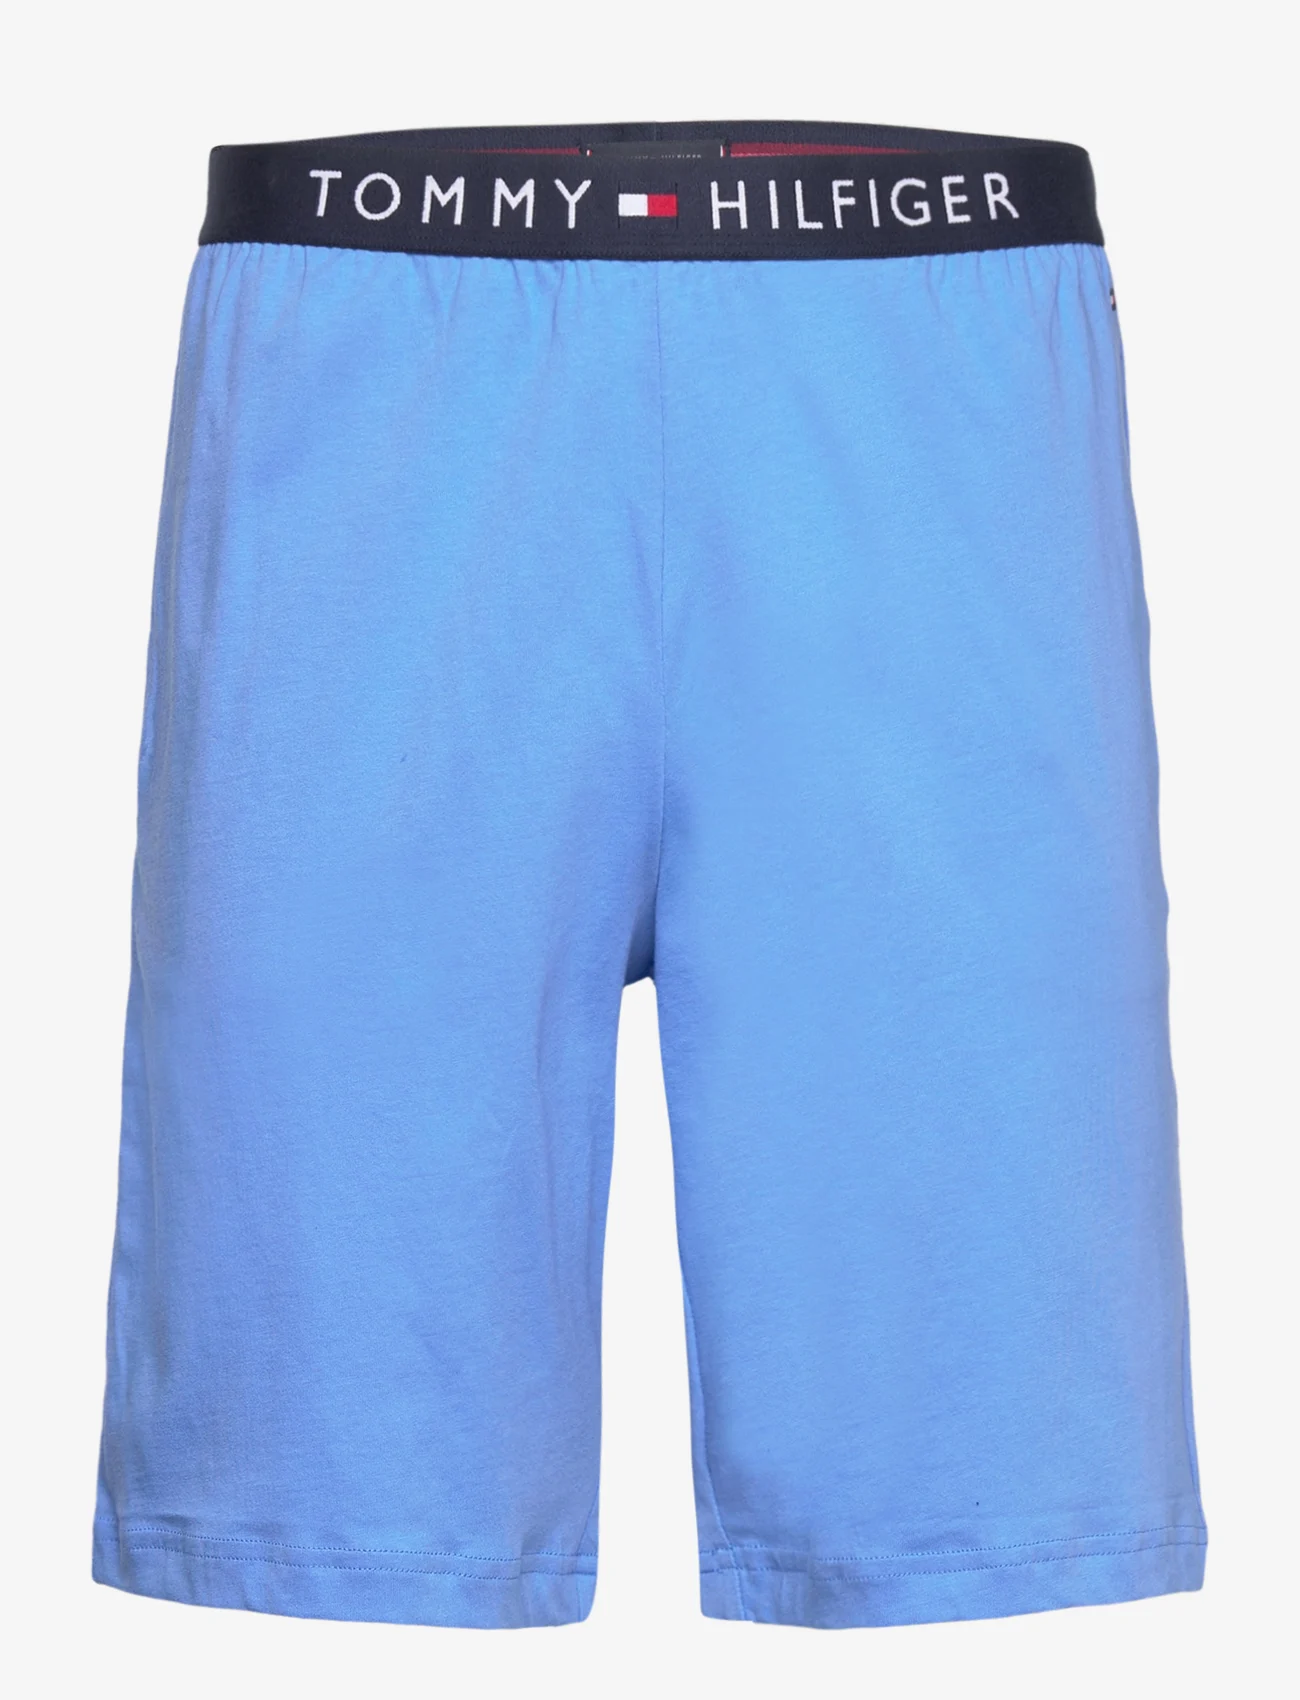 Tommy Hilfiger - JERSEY SHORT - pyjama bottoms - blue spell - 0